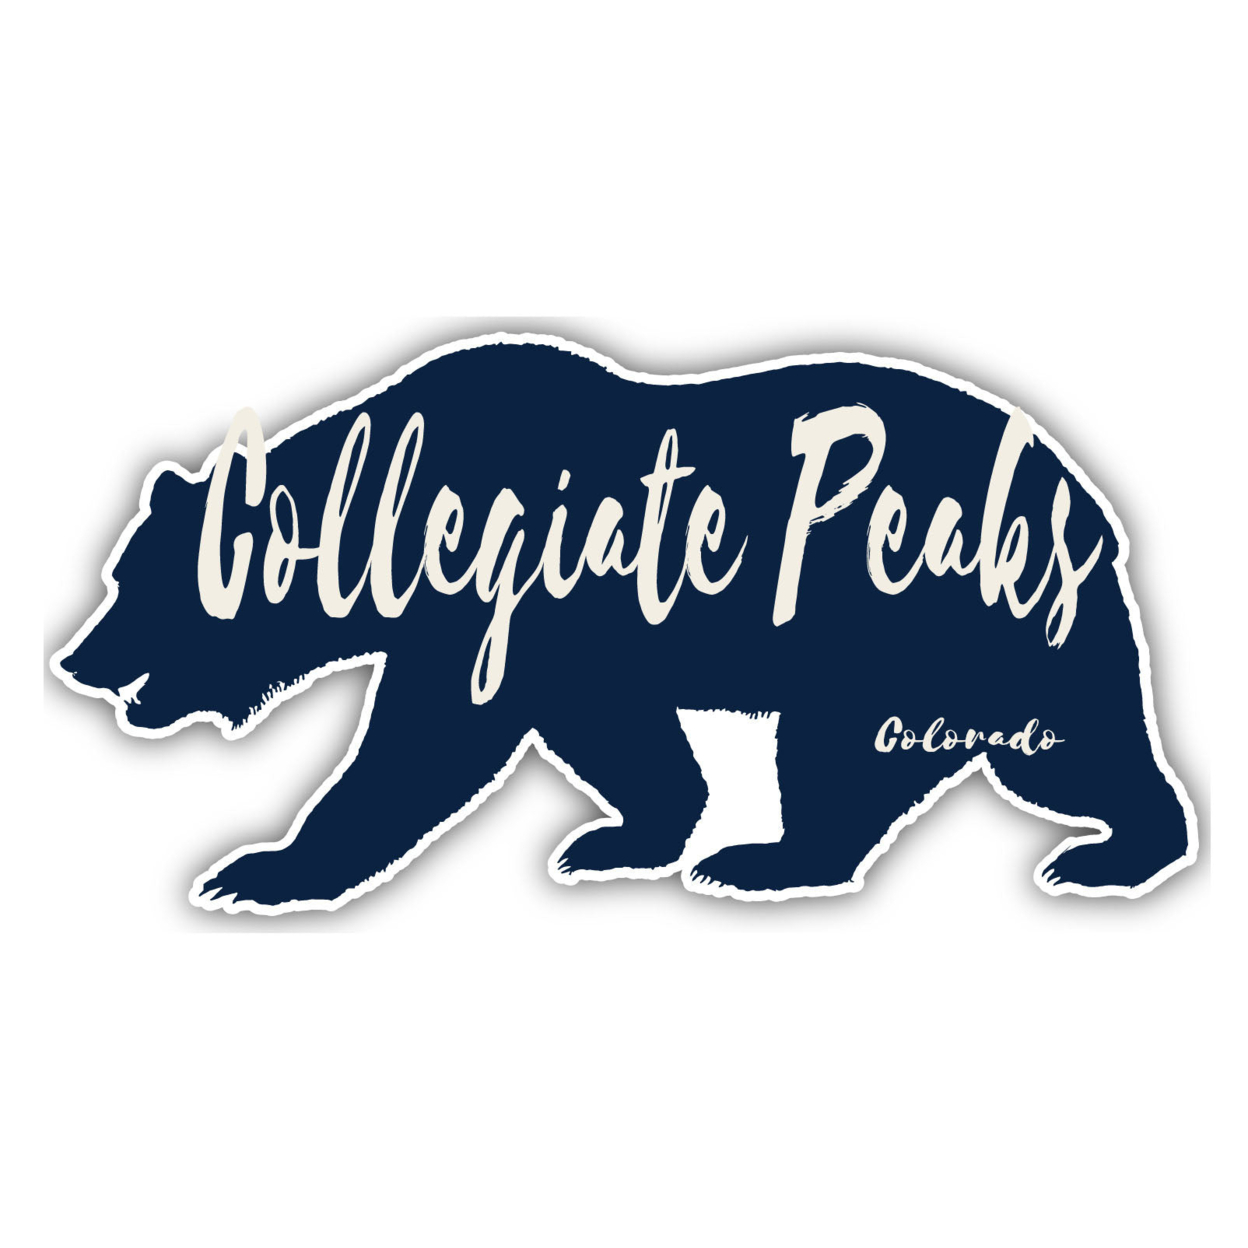 Collegiate Peaks Colorado Souvenir Decorative Stickers (Choose Theme And Size) - Single Unit, 8-Inch, Bear